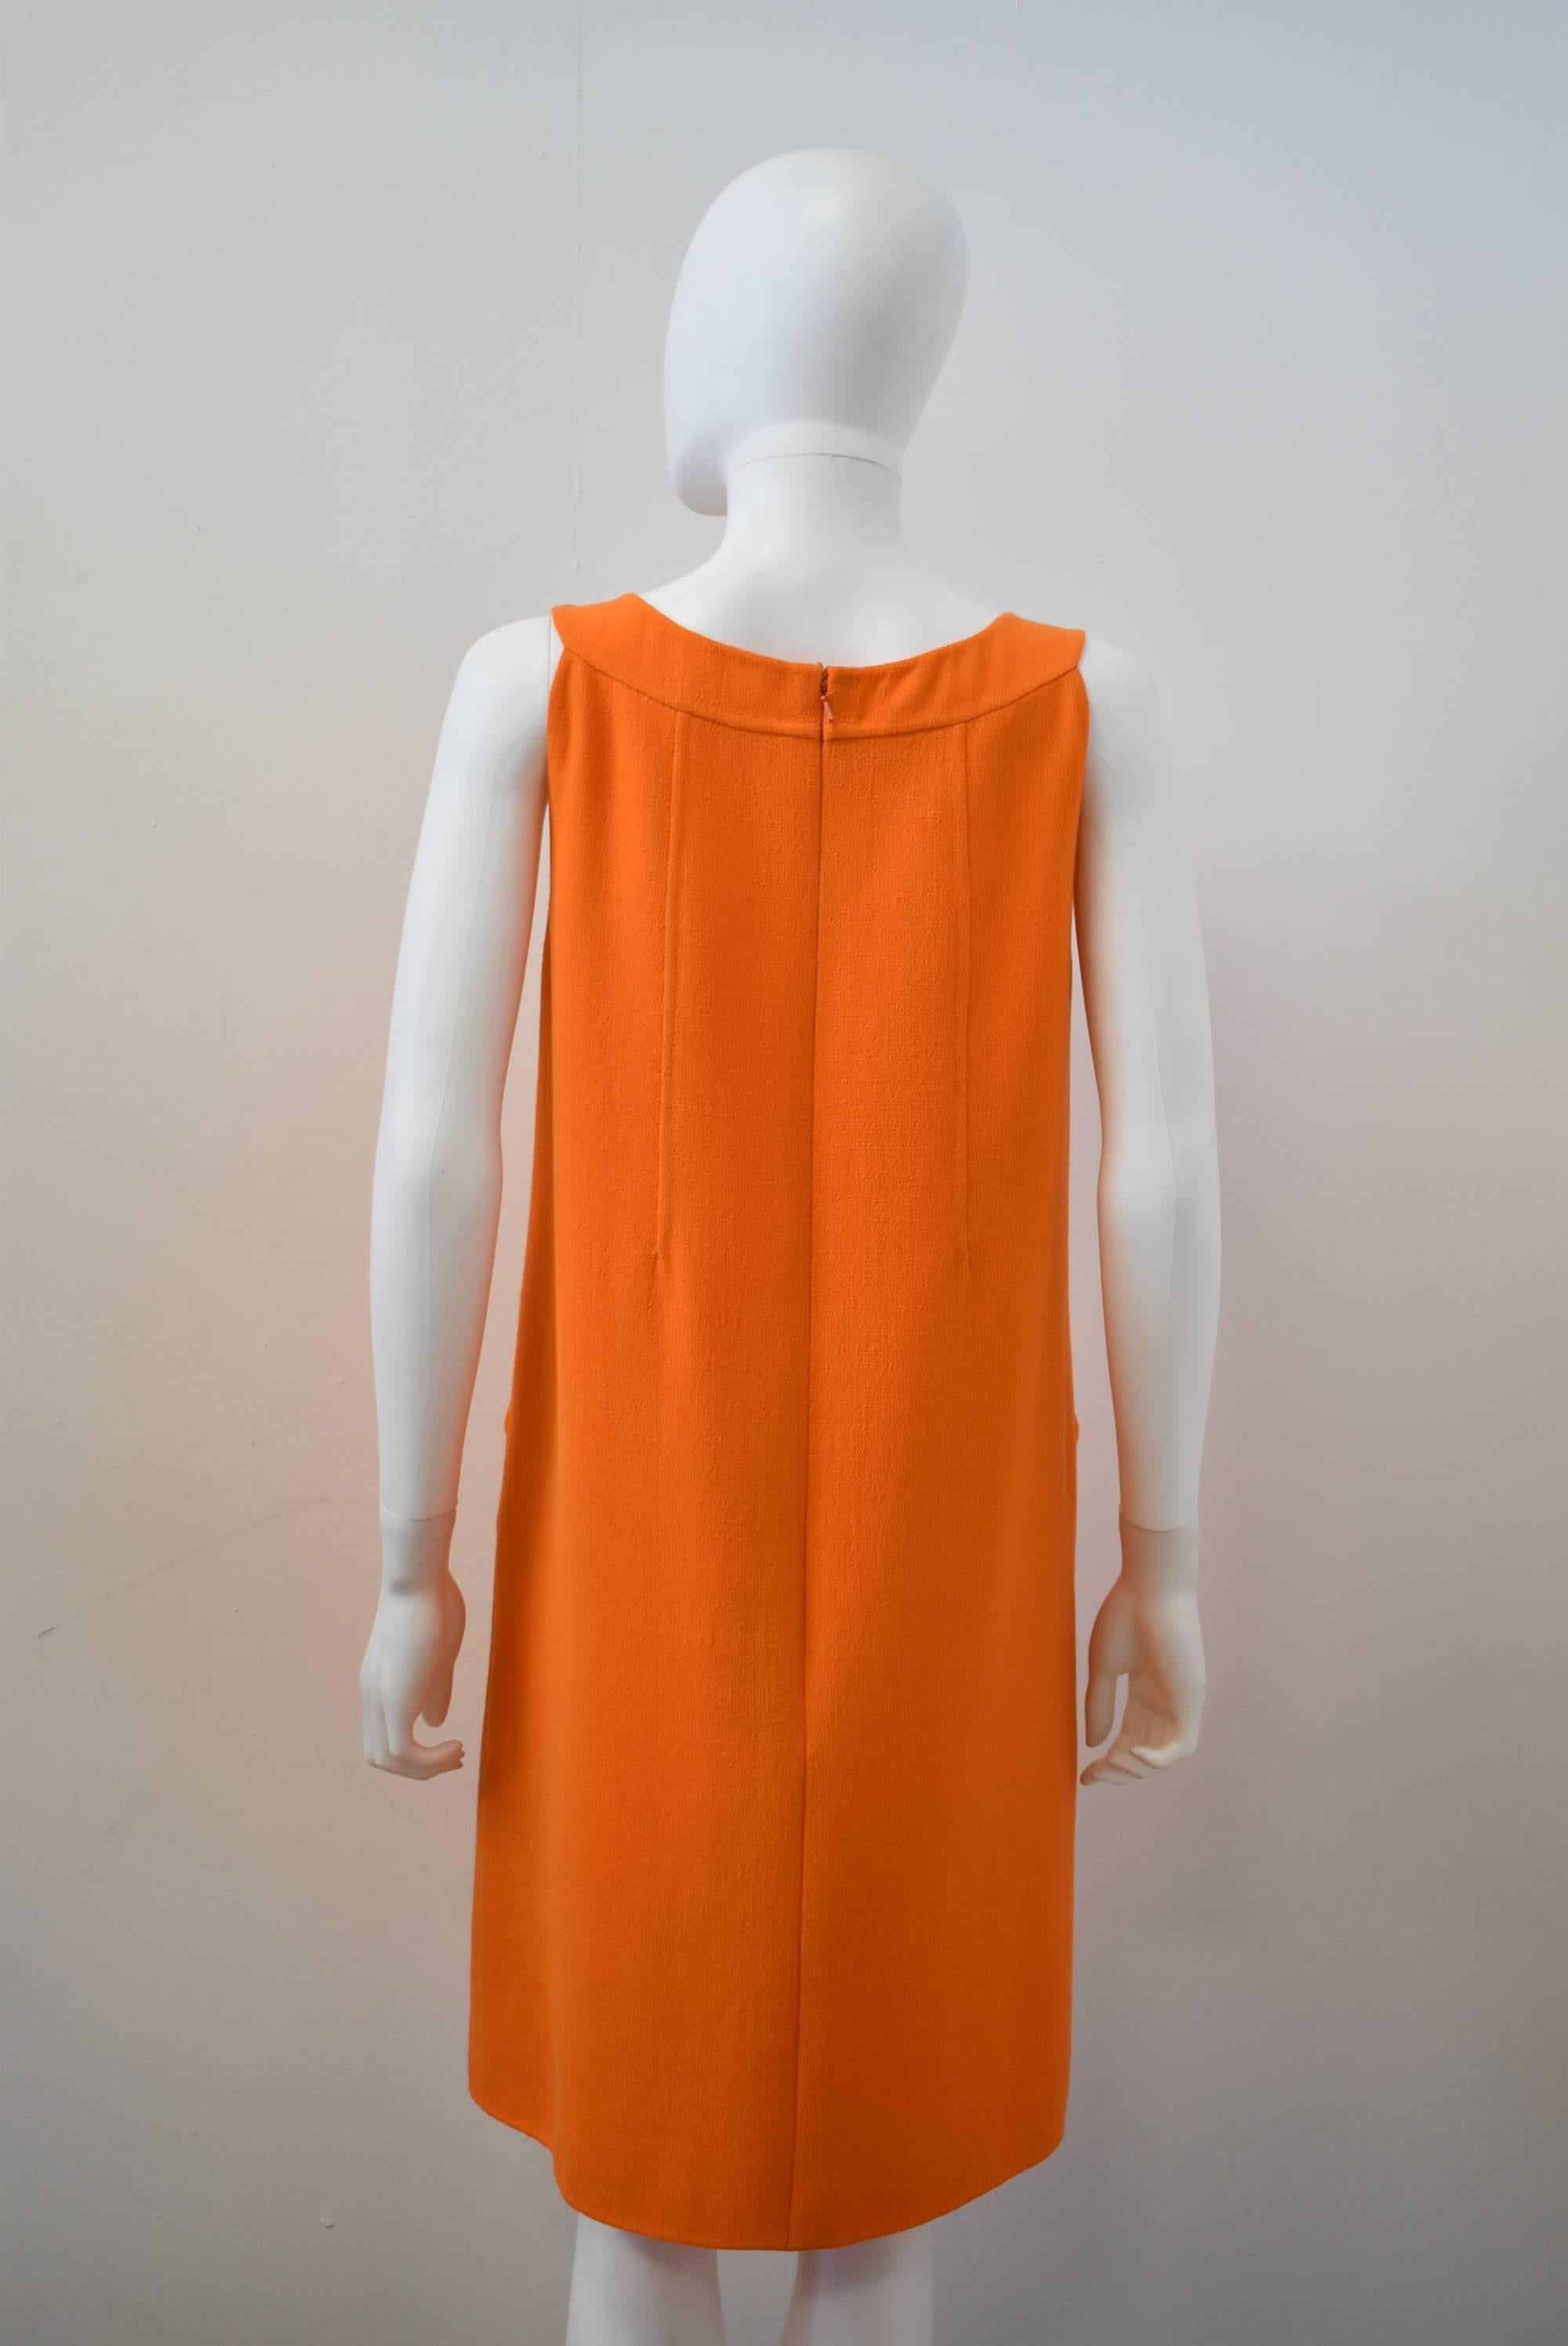 Women's Oscar de La Renta Orange Shift Dress with Embellished Collar S/S 2014